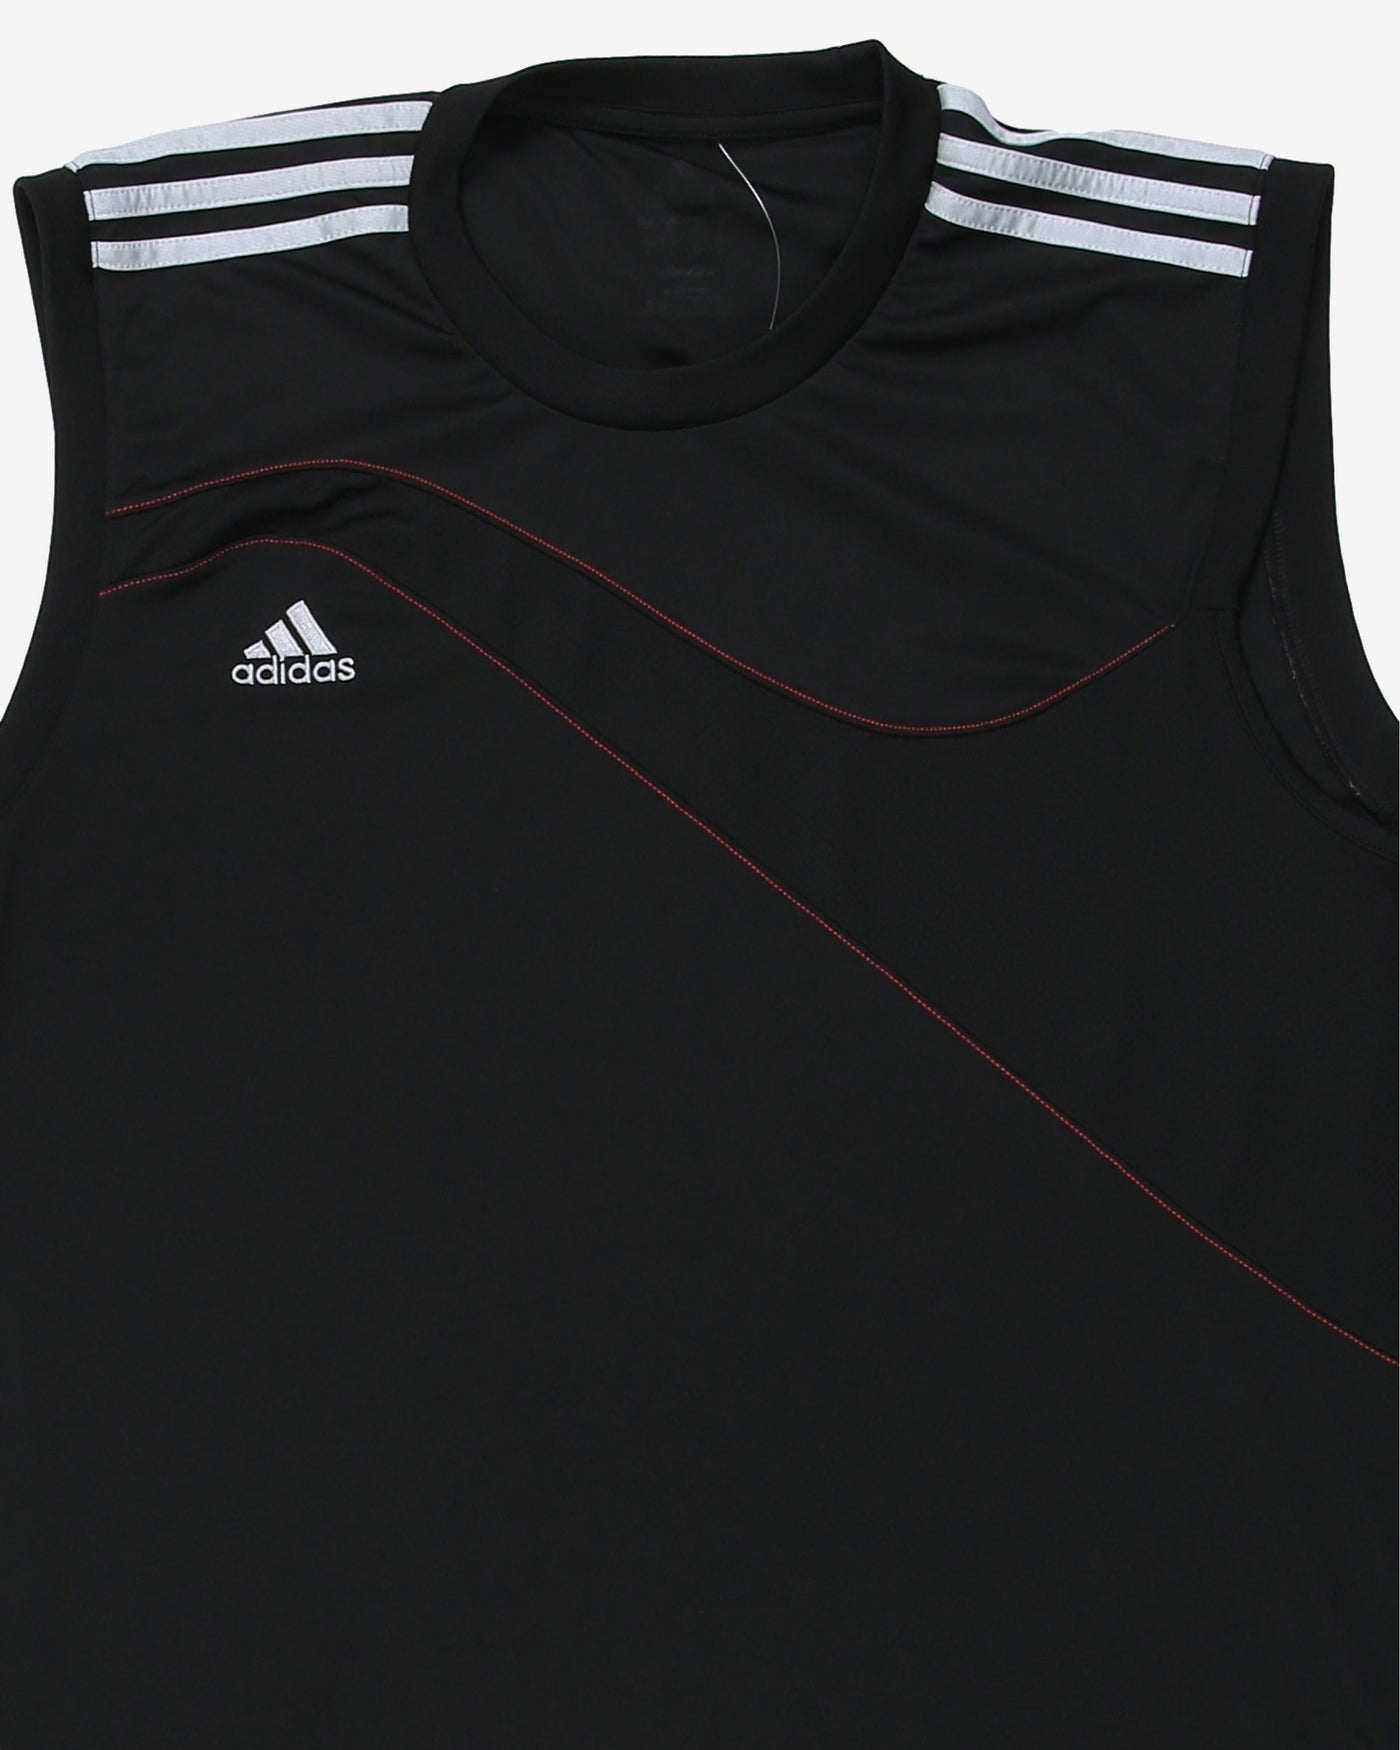 Adidas Predator Black Basketball Training Vest - L